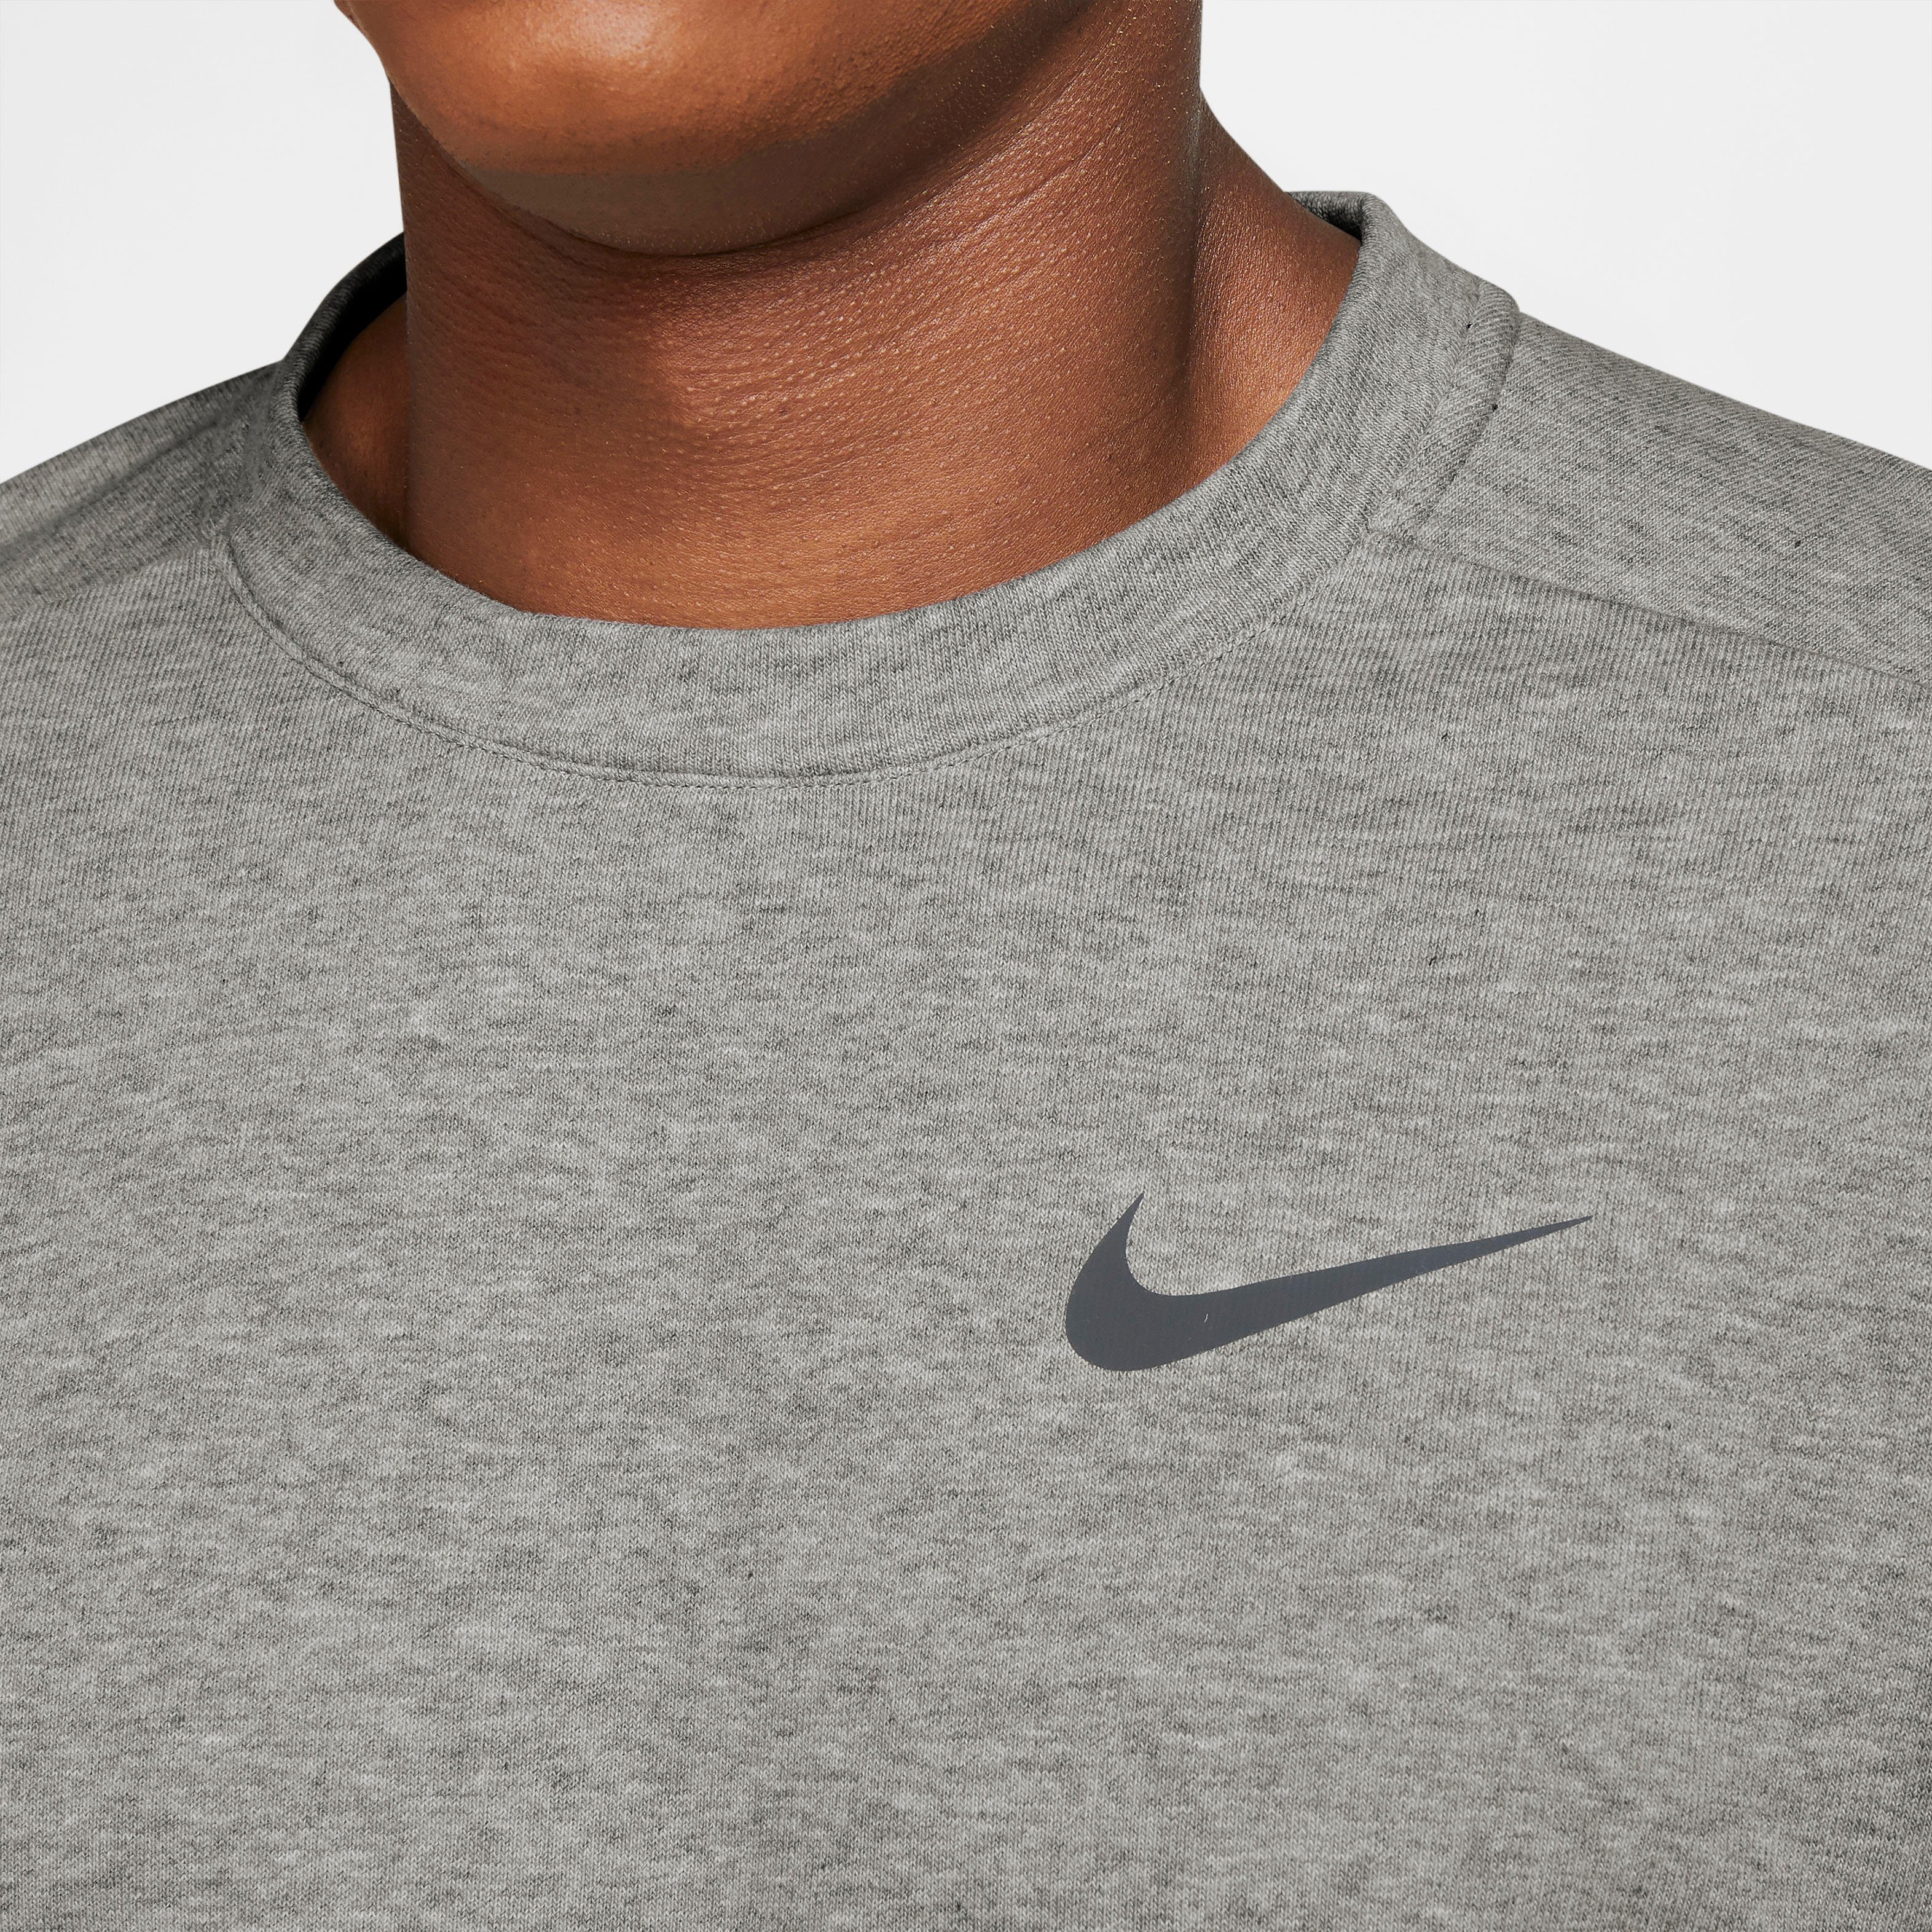 Men's Crew Dri-FIT hellgrau-meliert Trainingsshirt Training Nike